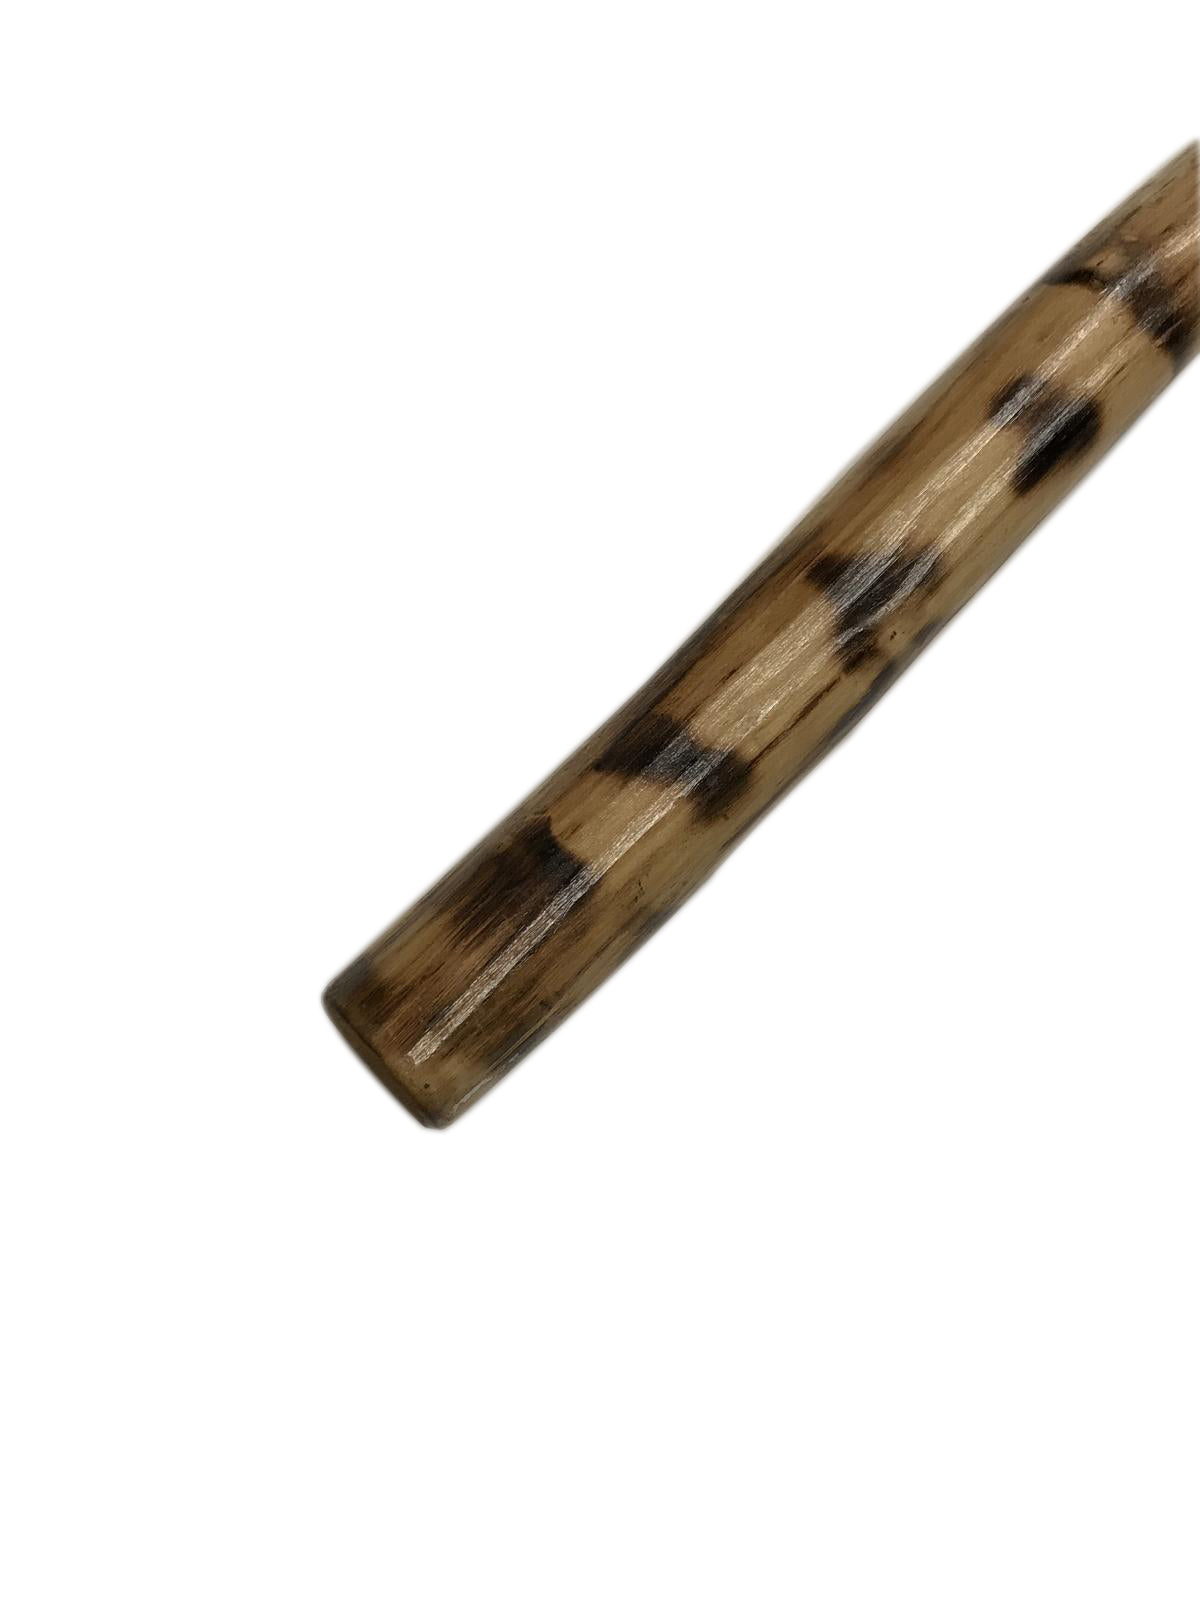 Escrima Kali Arnis Filipino REGULAR Guava Hardwood Stick 32" x 1" RARE, Crooked